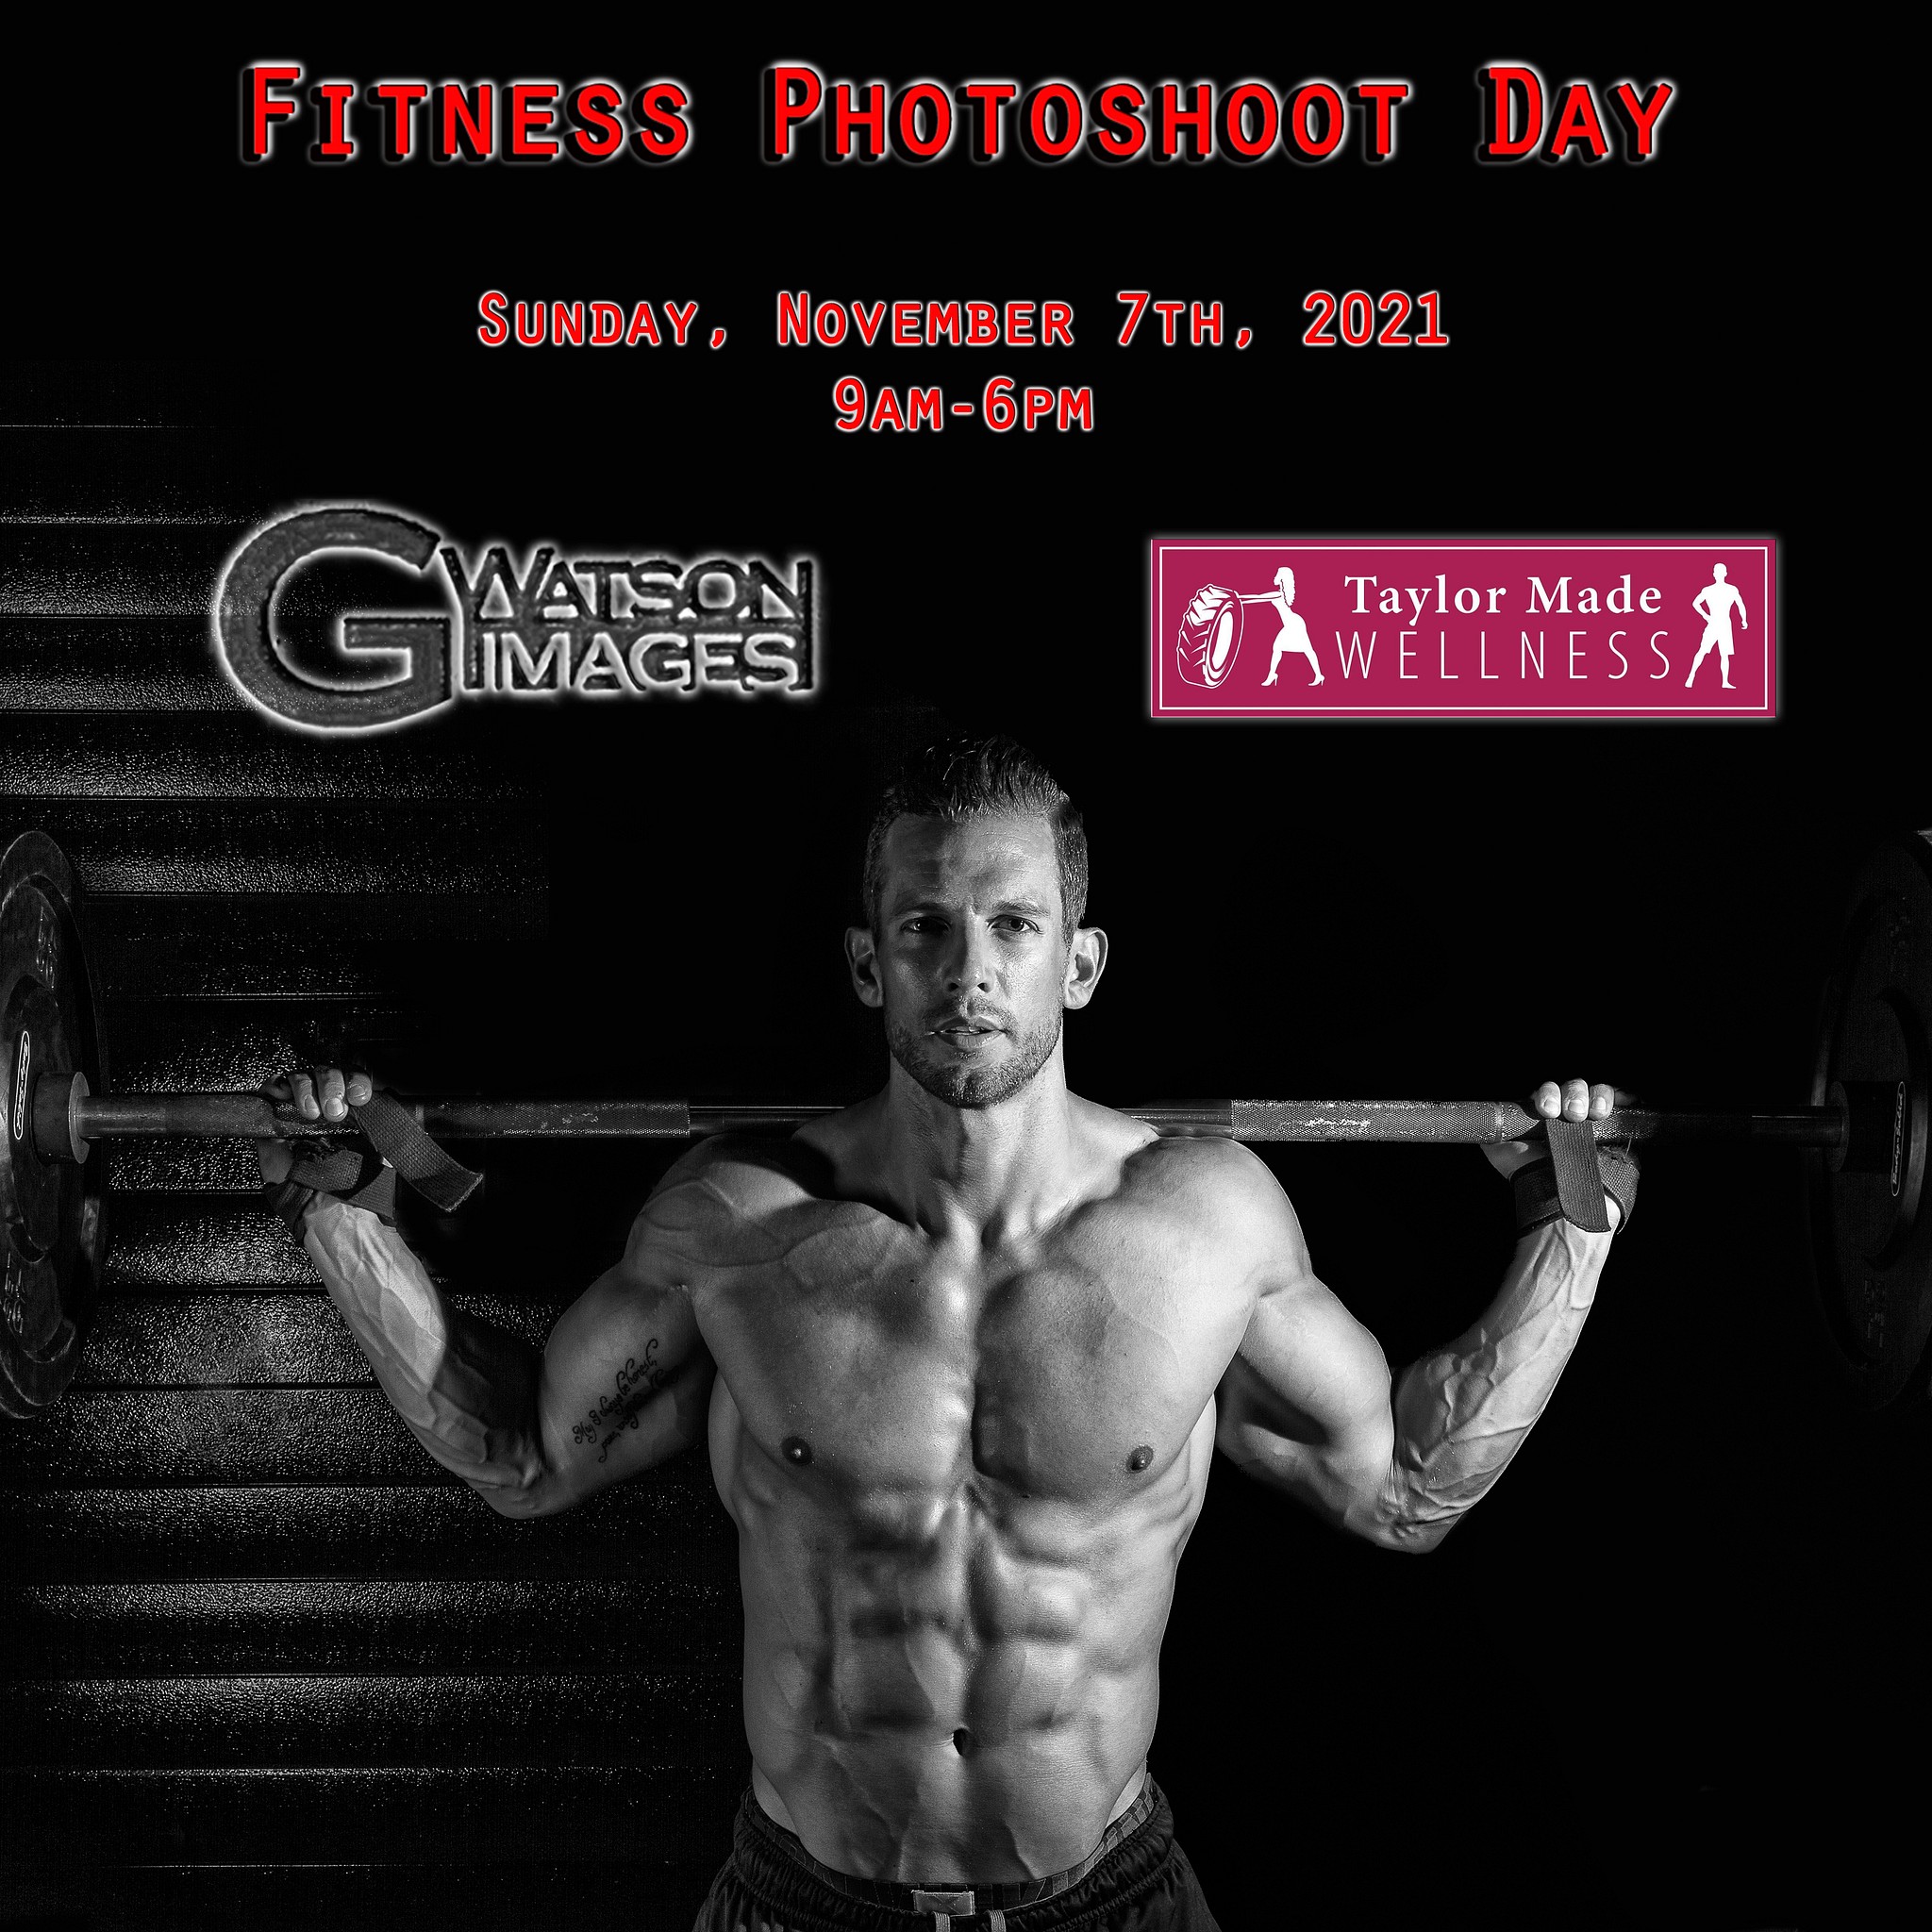 Taylor Made Wellness Fitness Photoshoot Day - Sunday, November 7th, 2021